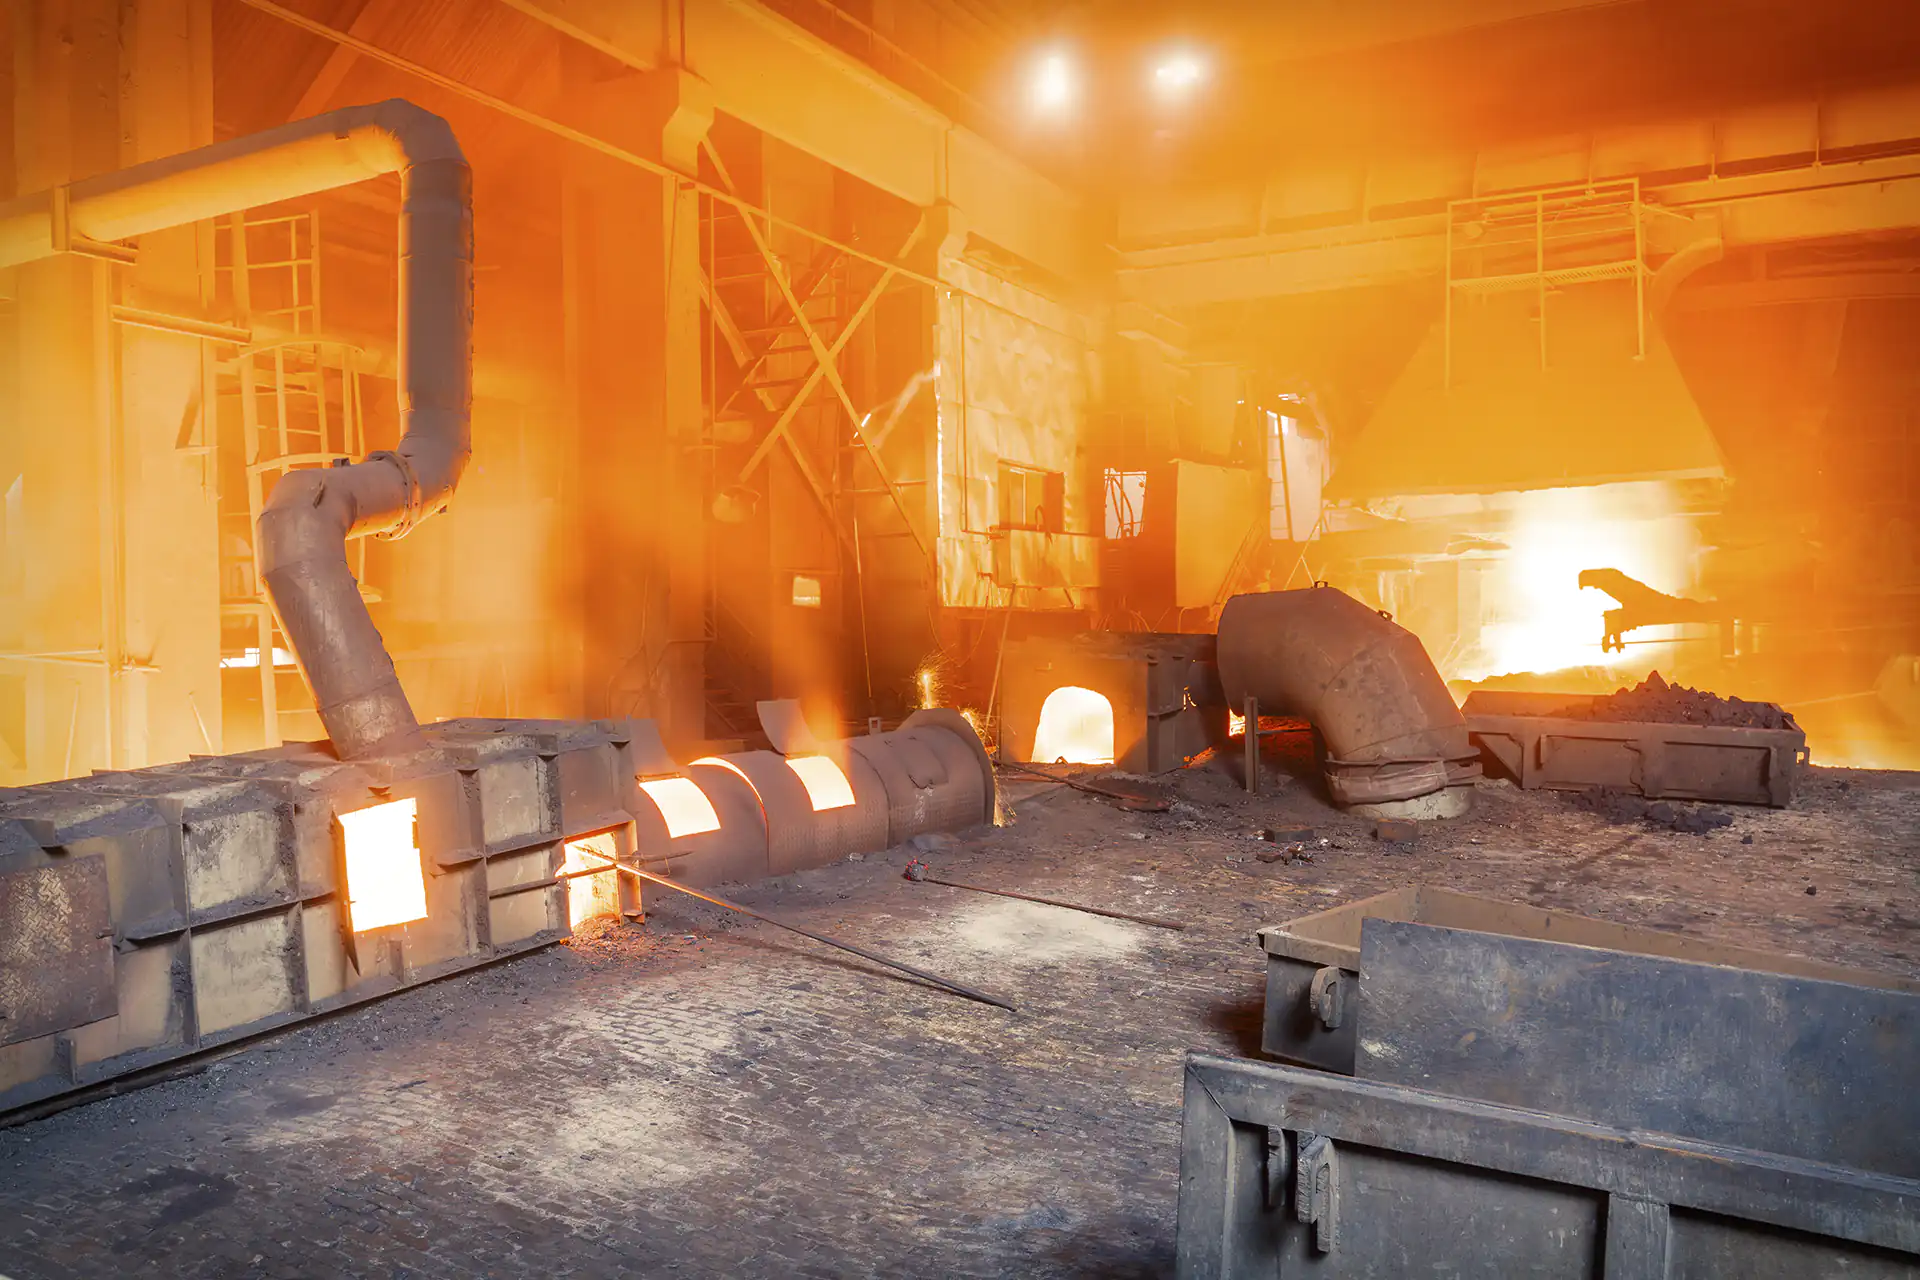 steel mills iron furnace heat fire ducting